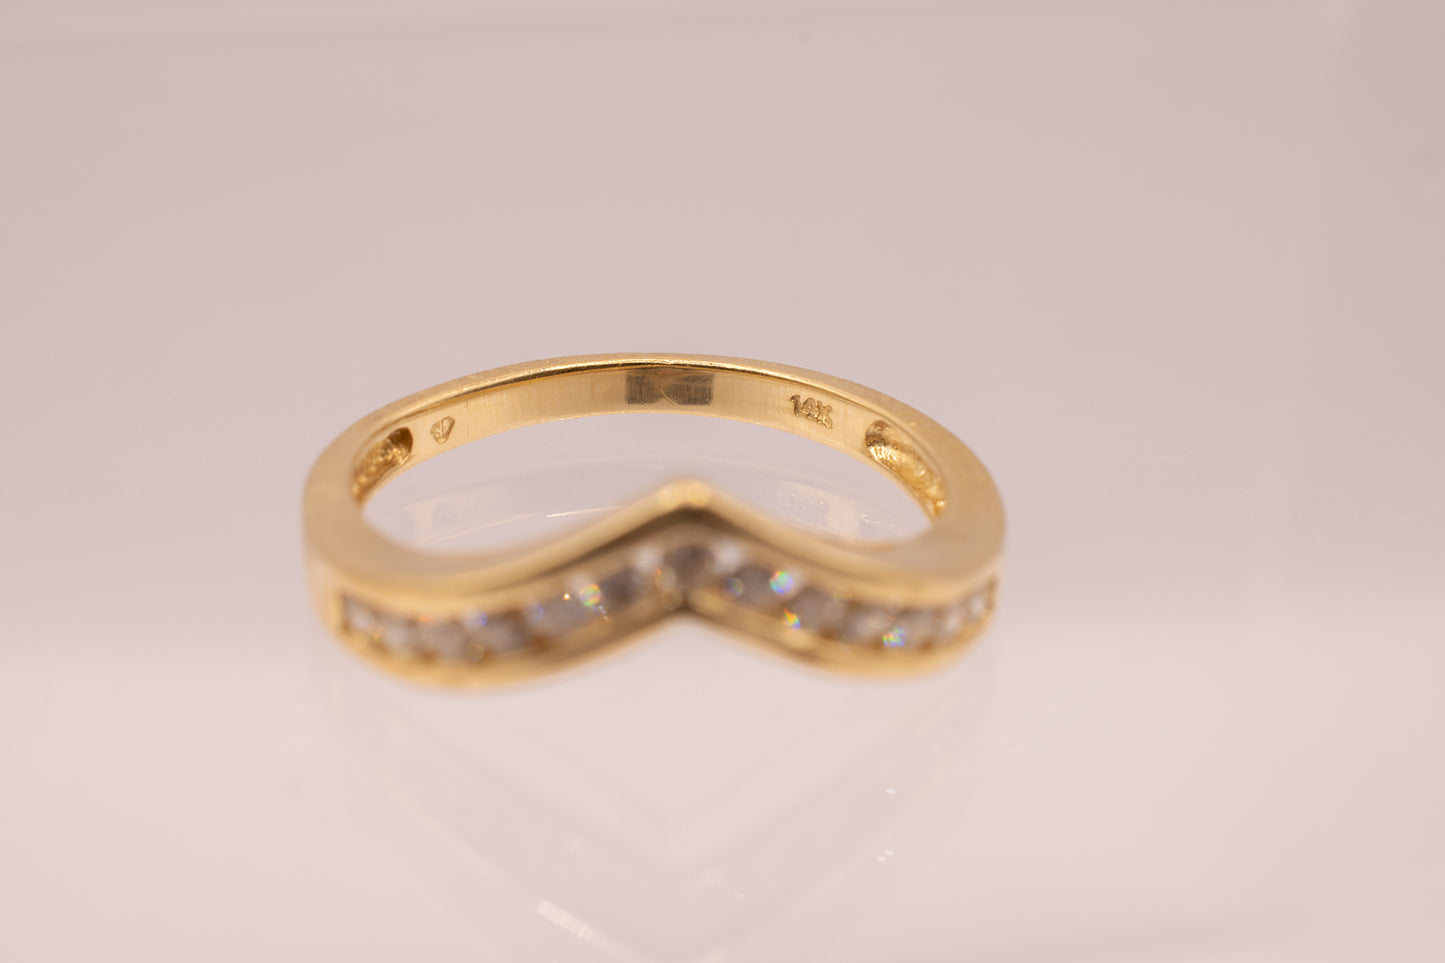 Vintage 14k Chevron Diamond Ring